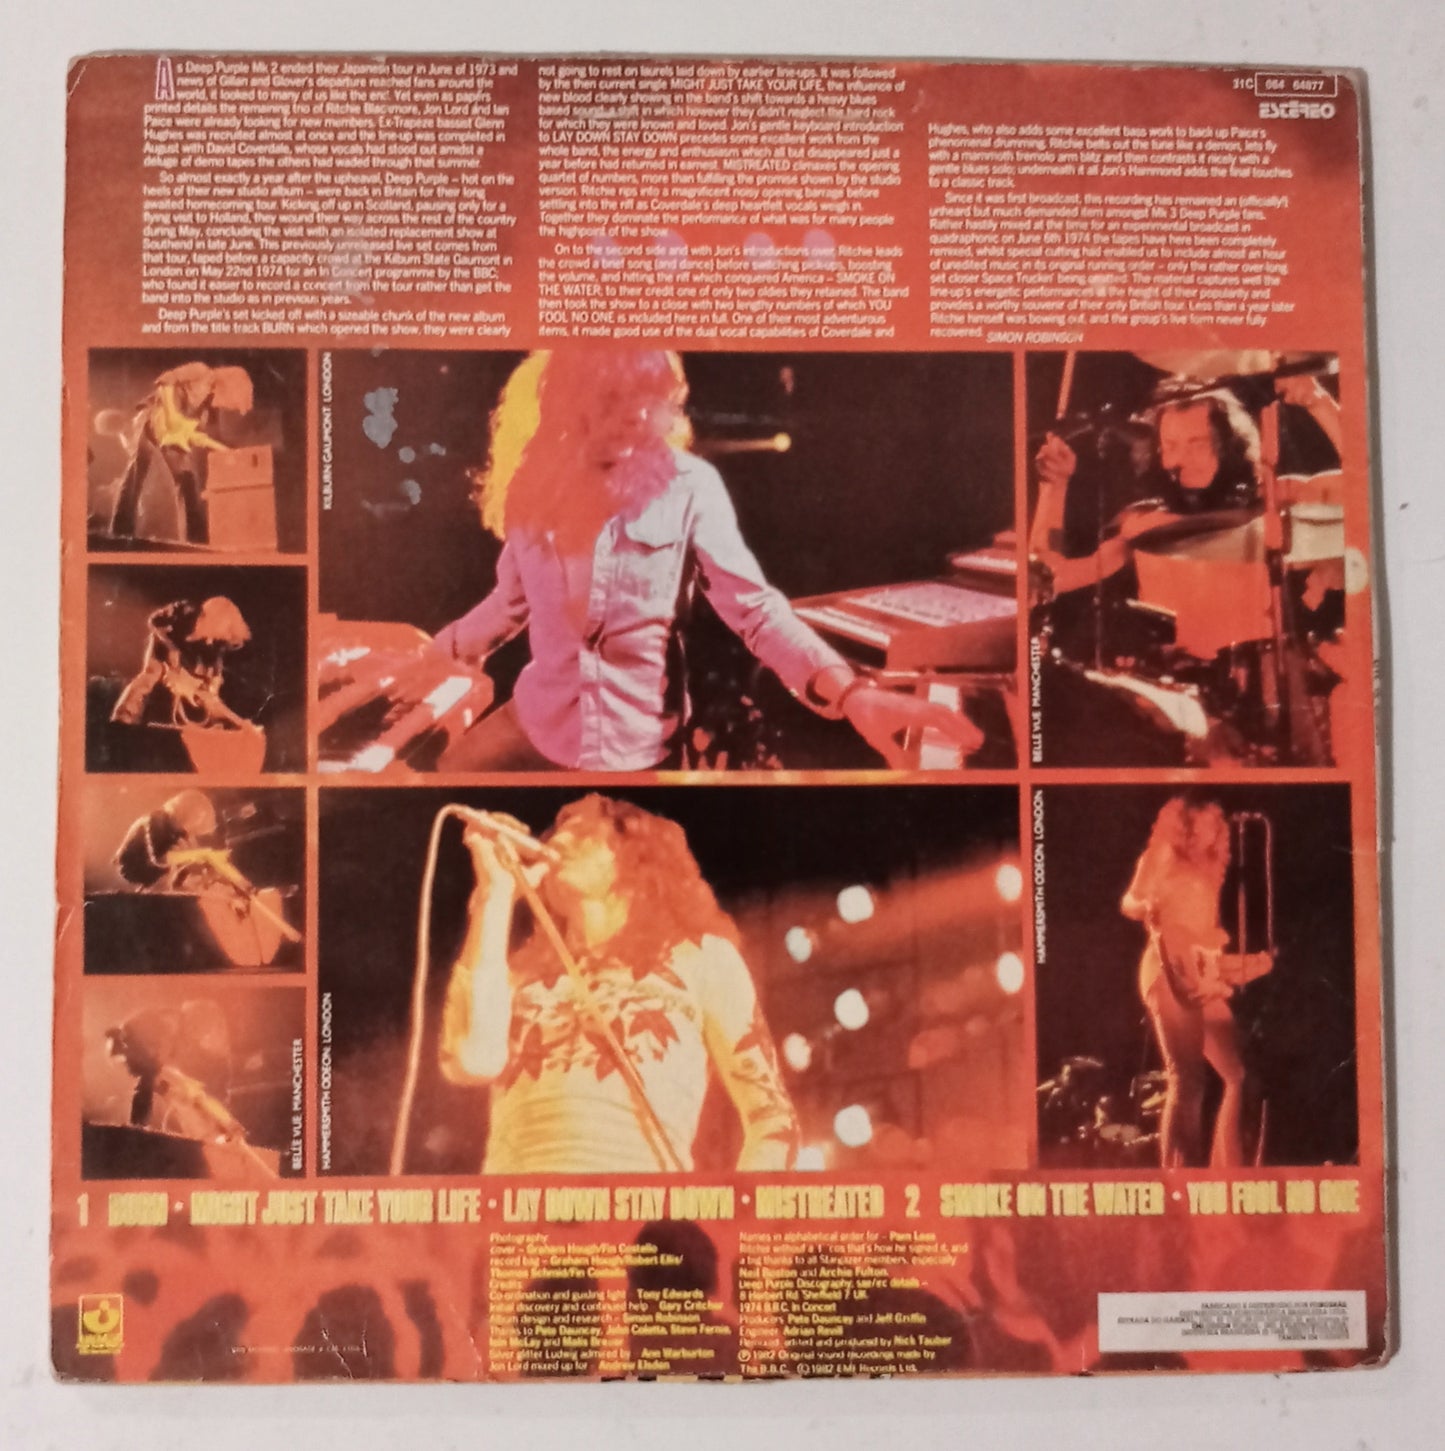 Deep Purple - Live in London (LP Nacional - Usado)